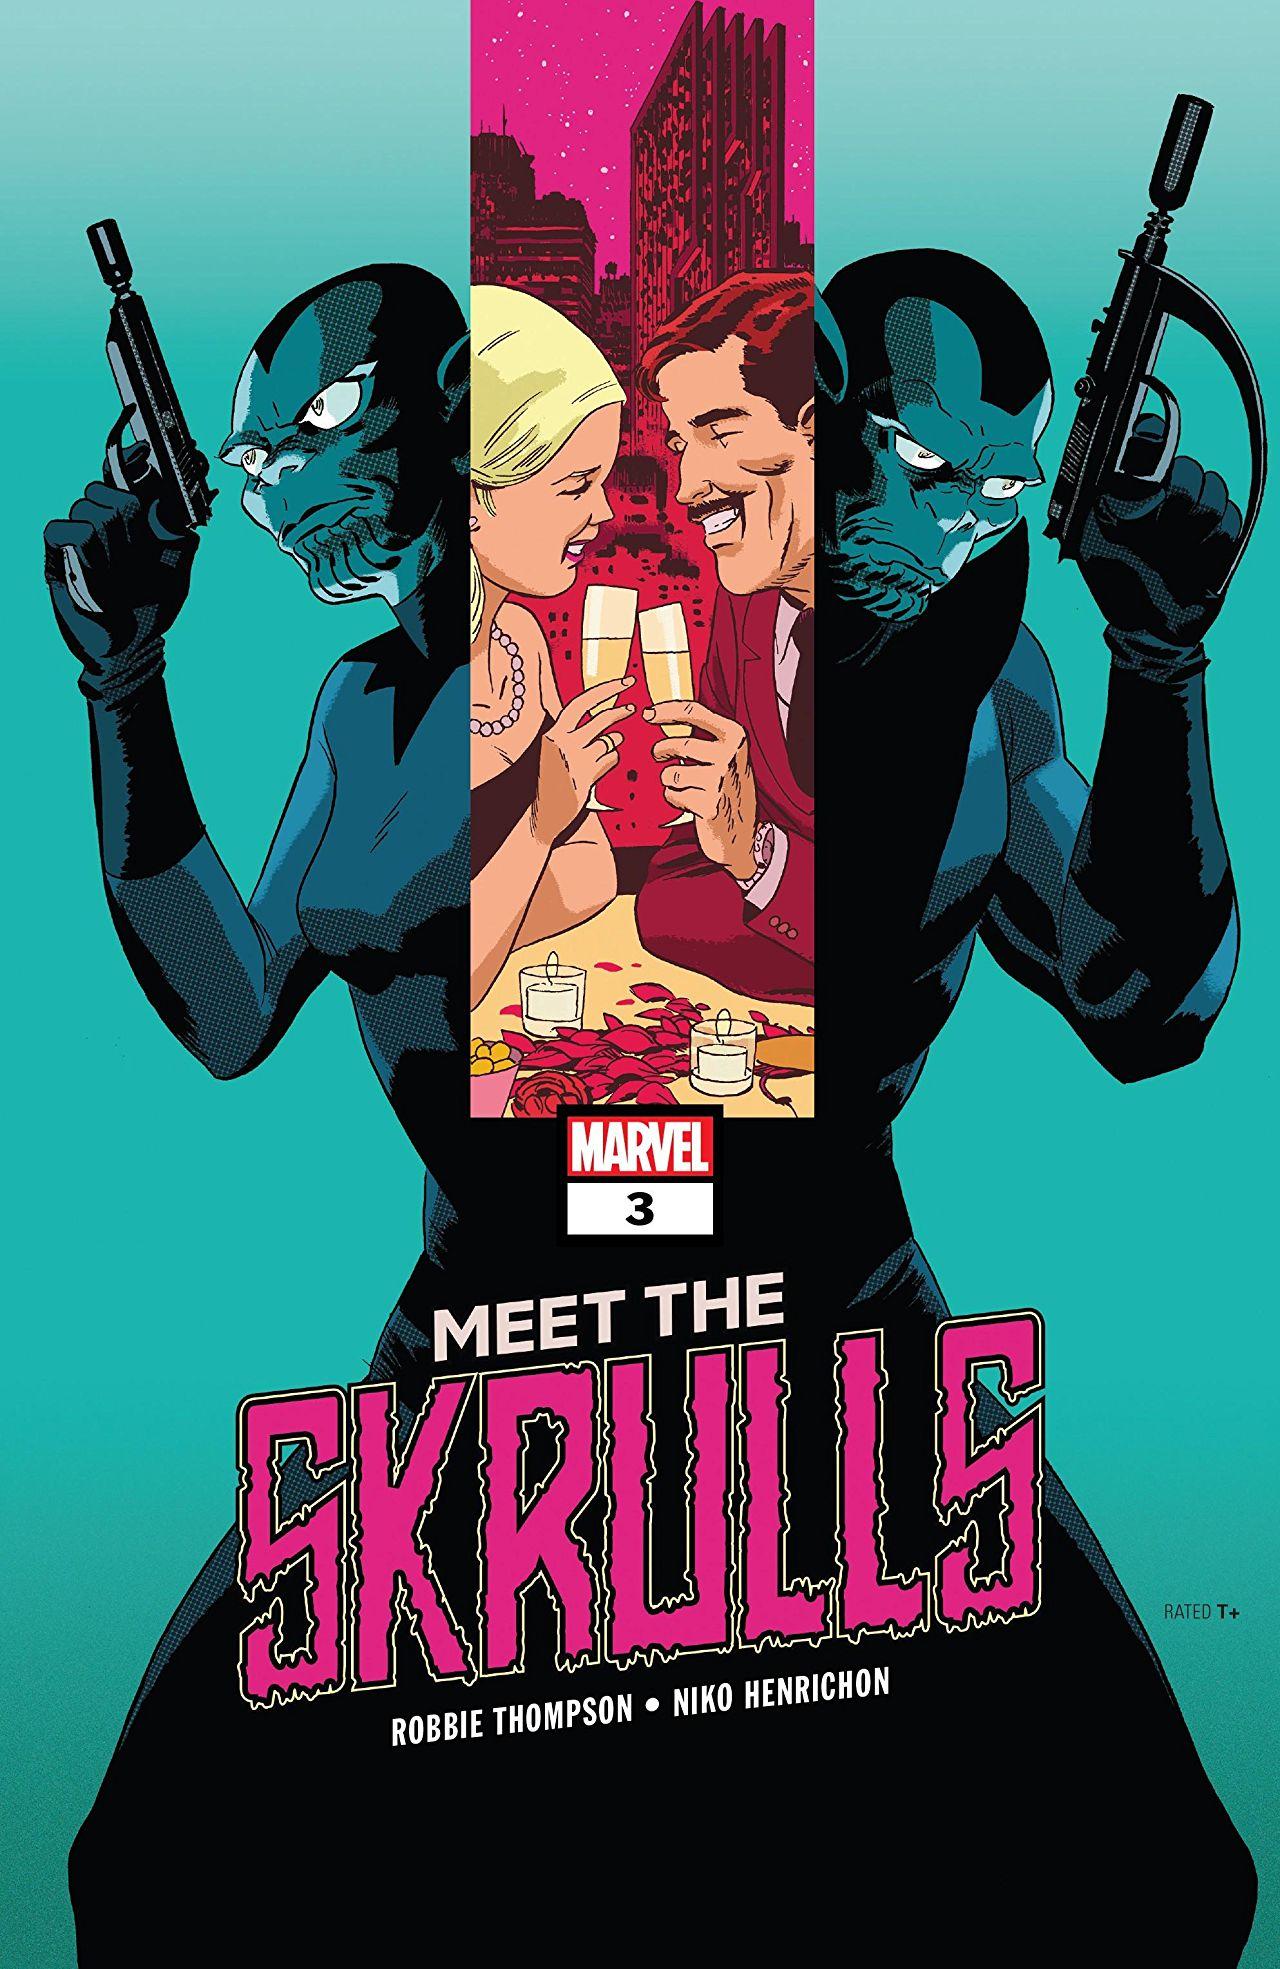 Meet the Skrulls Vol. 1 #3